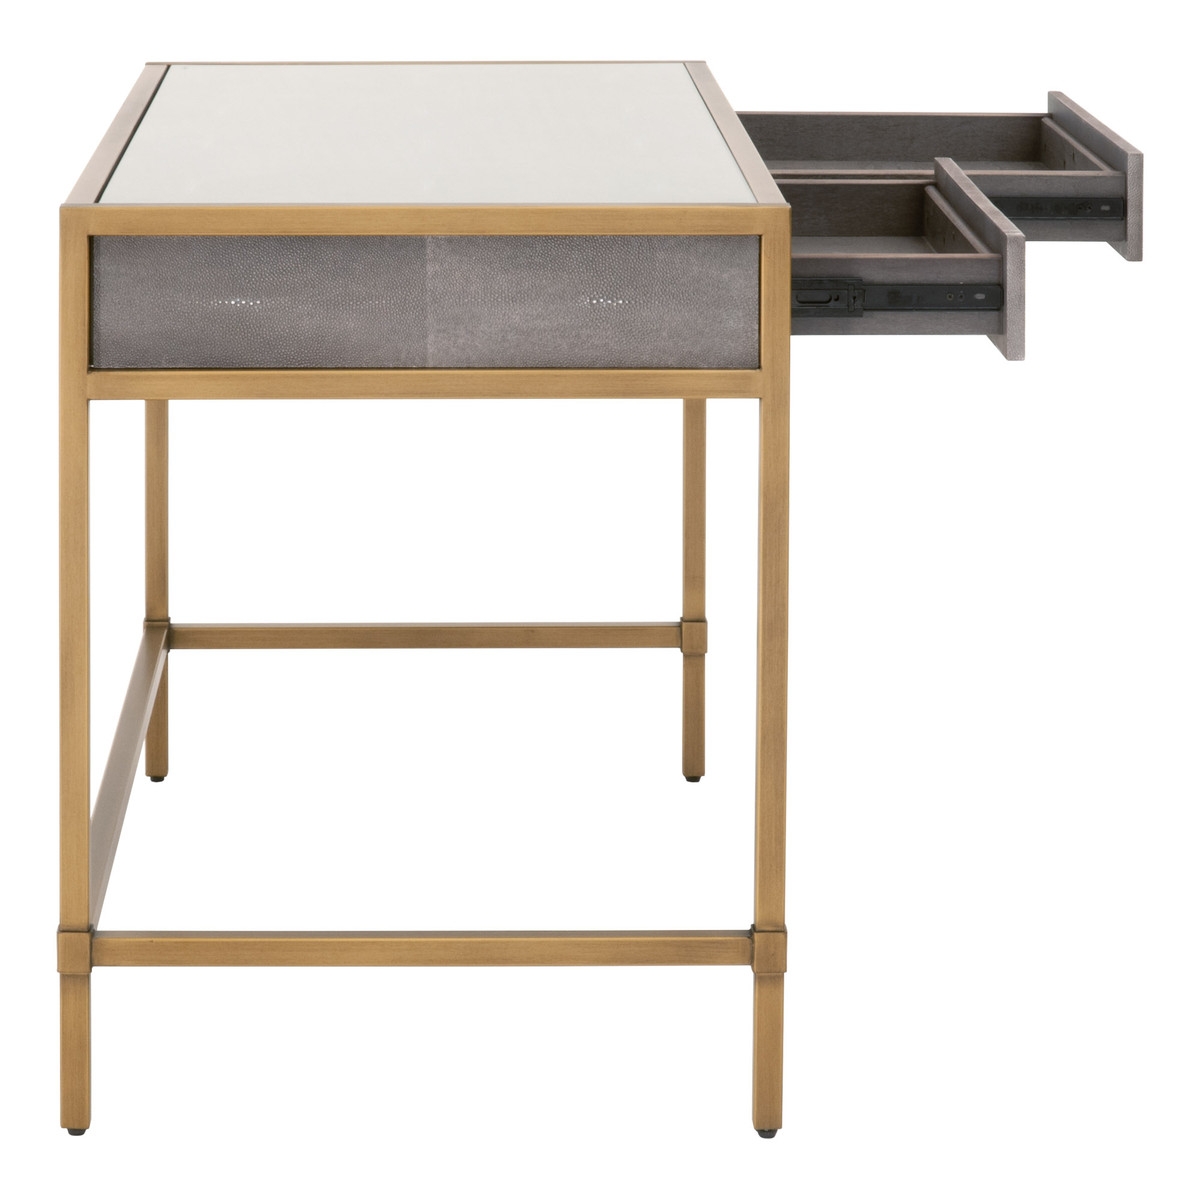 Colette Shagreen Desk, Gray & Gold - Image 6